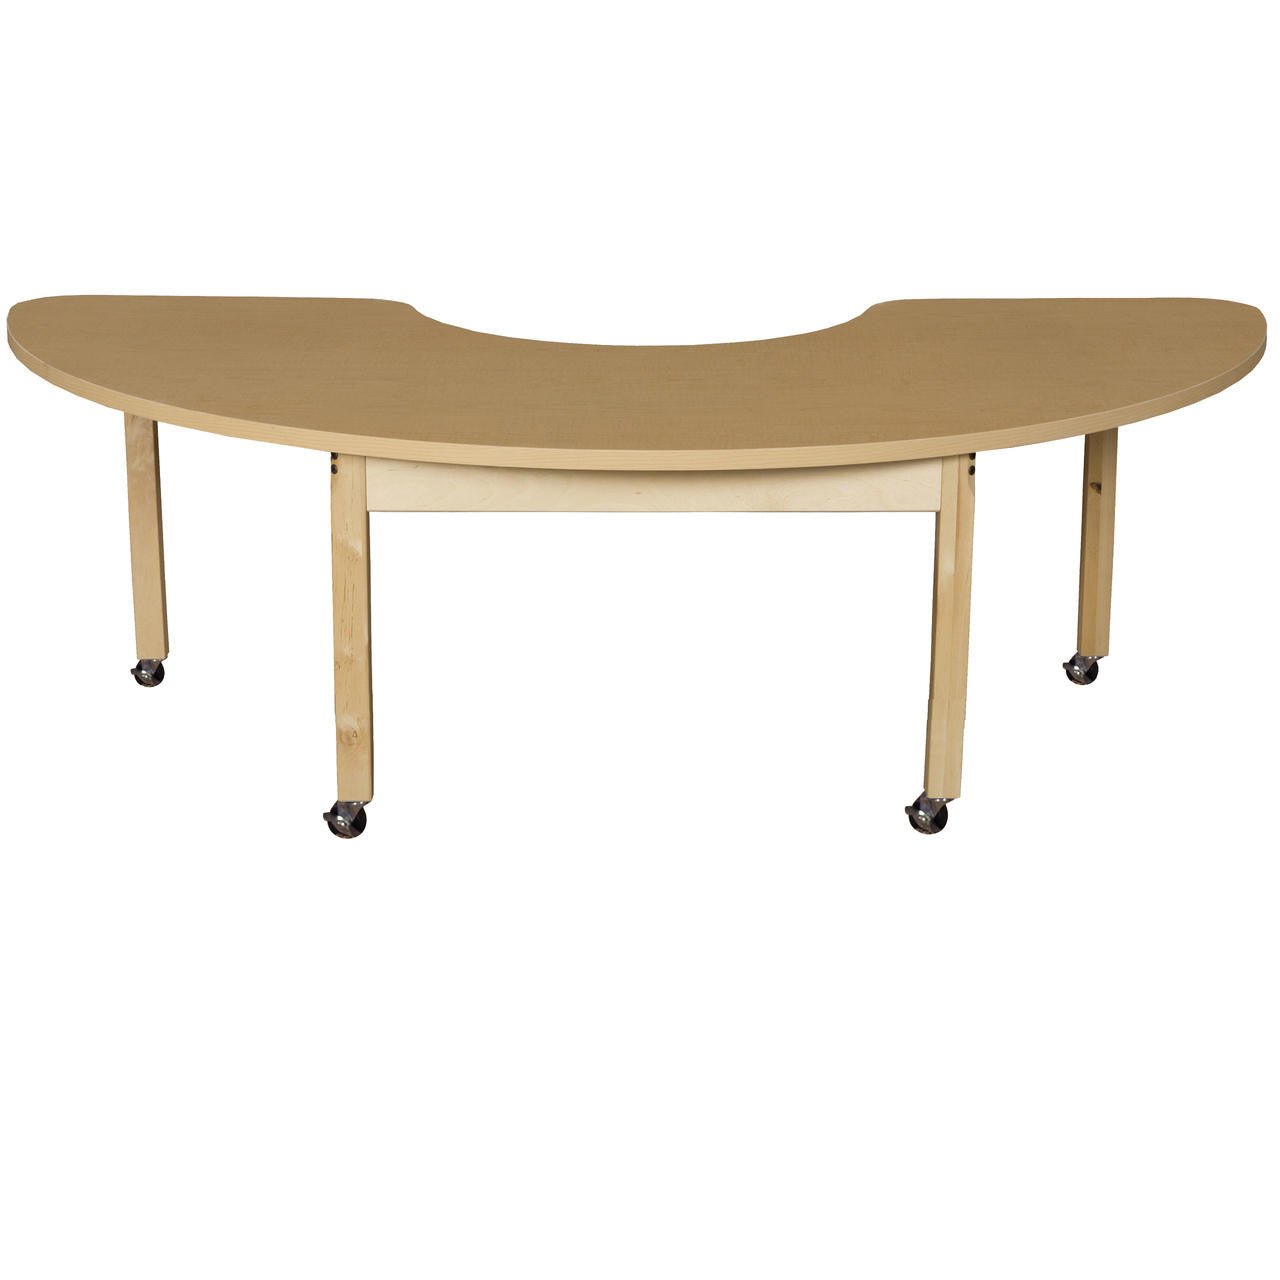 Mobile Half Circle High Pressure Laminate Table with Hardwood Legs 16"